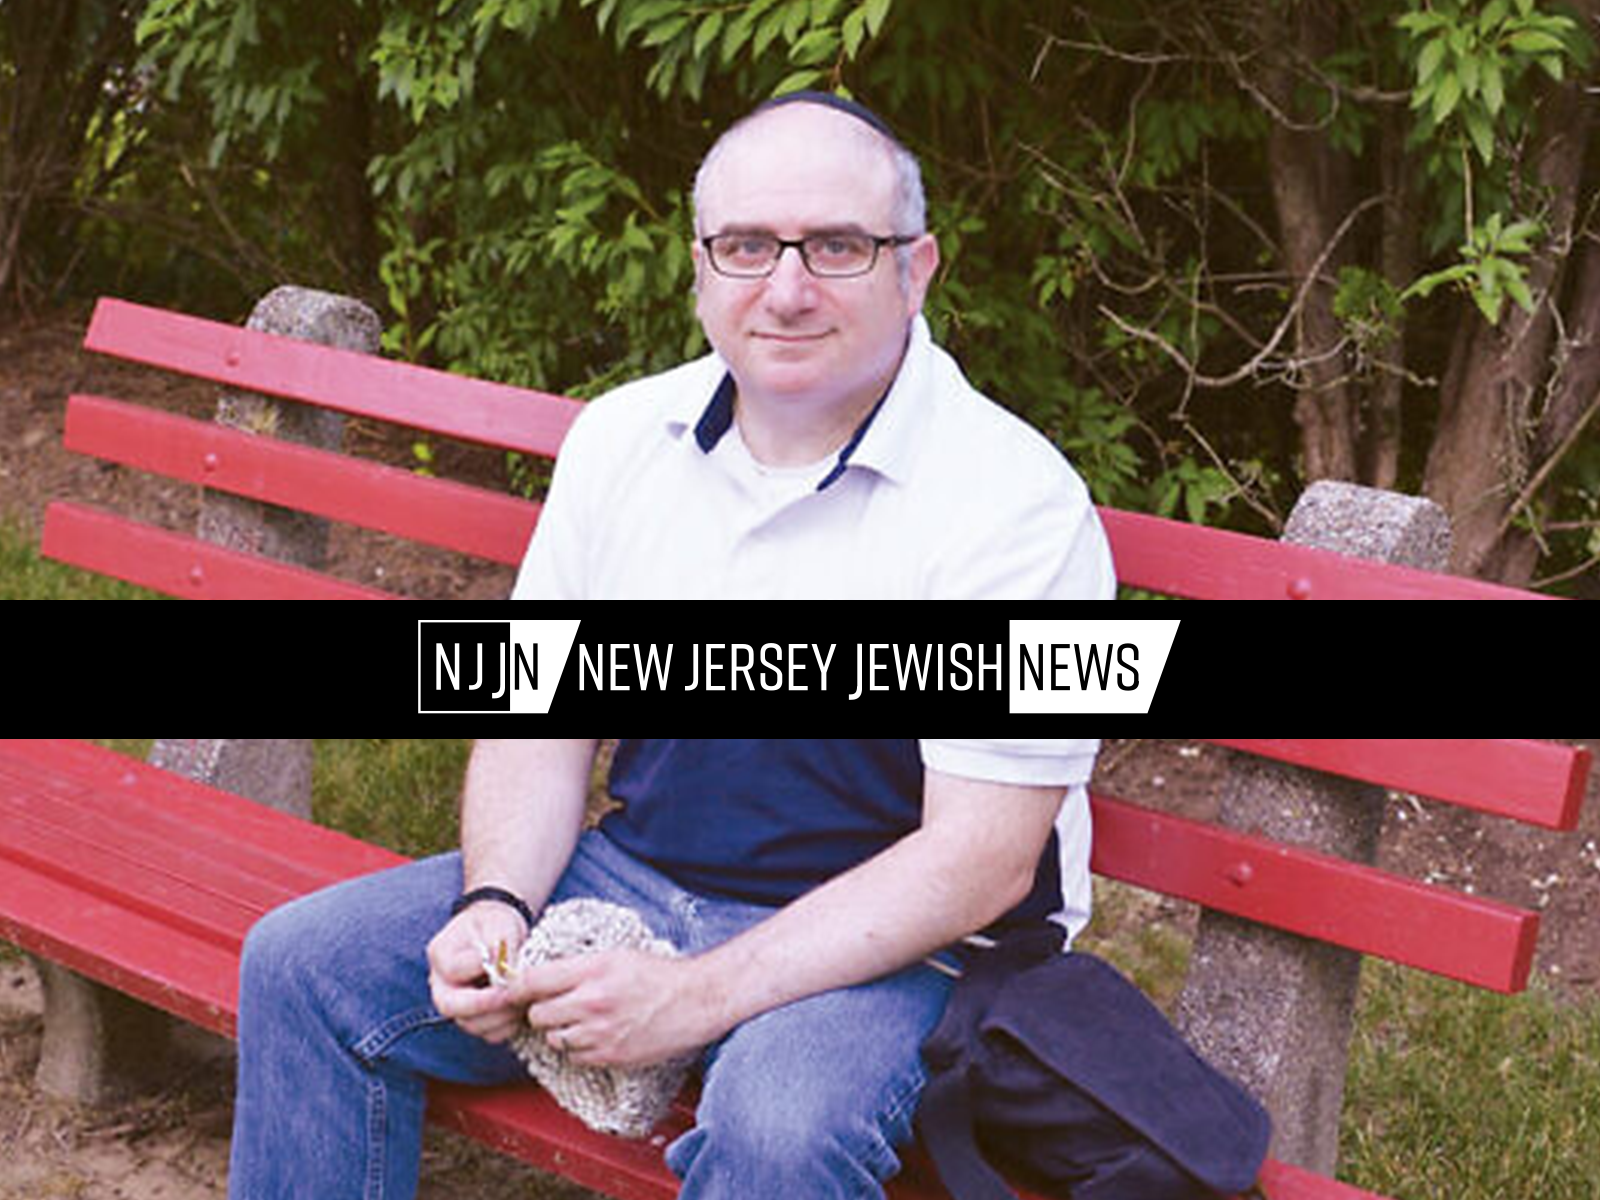 New Jersey Jewish News logo overlaid on photo of Eric Schorr